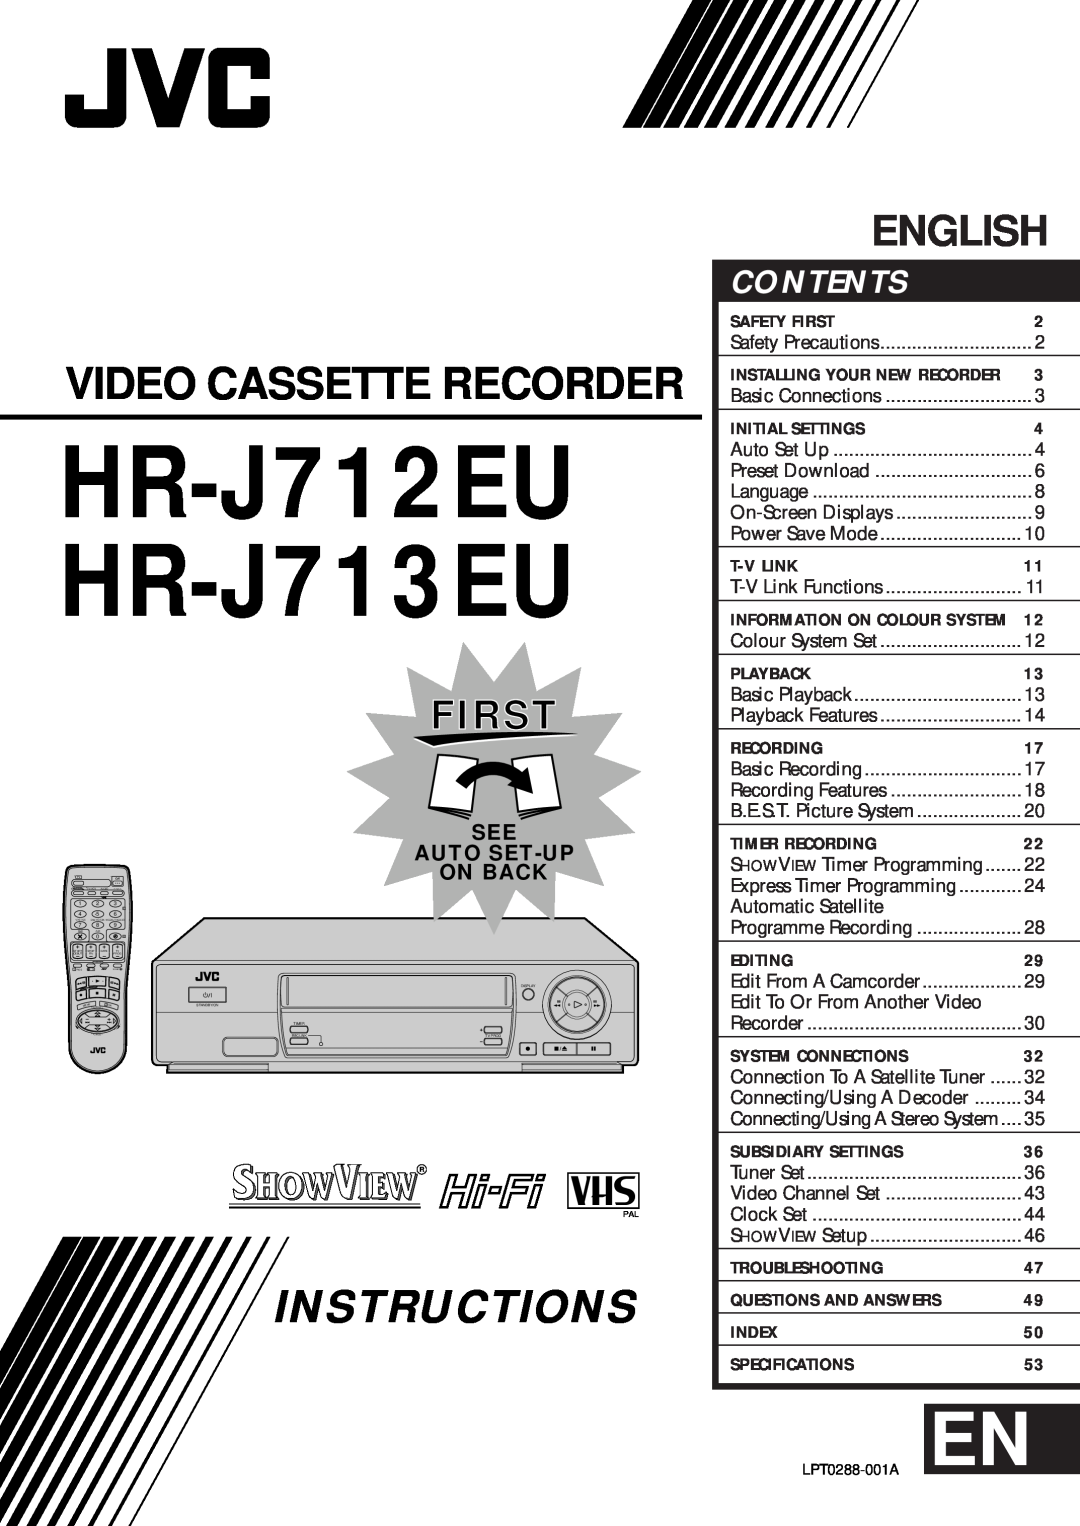 JVC specifications HR-J712EU HR-J713EU, Video Cassette Recorder, Instructions, English, First, Contents 